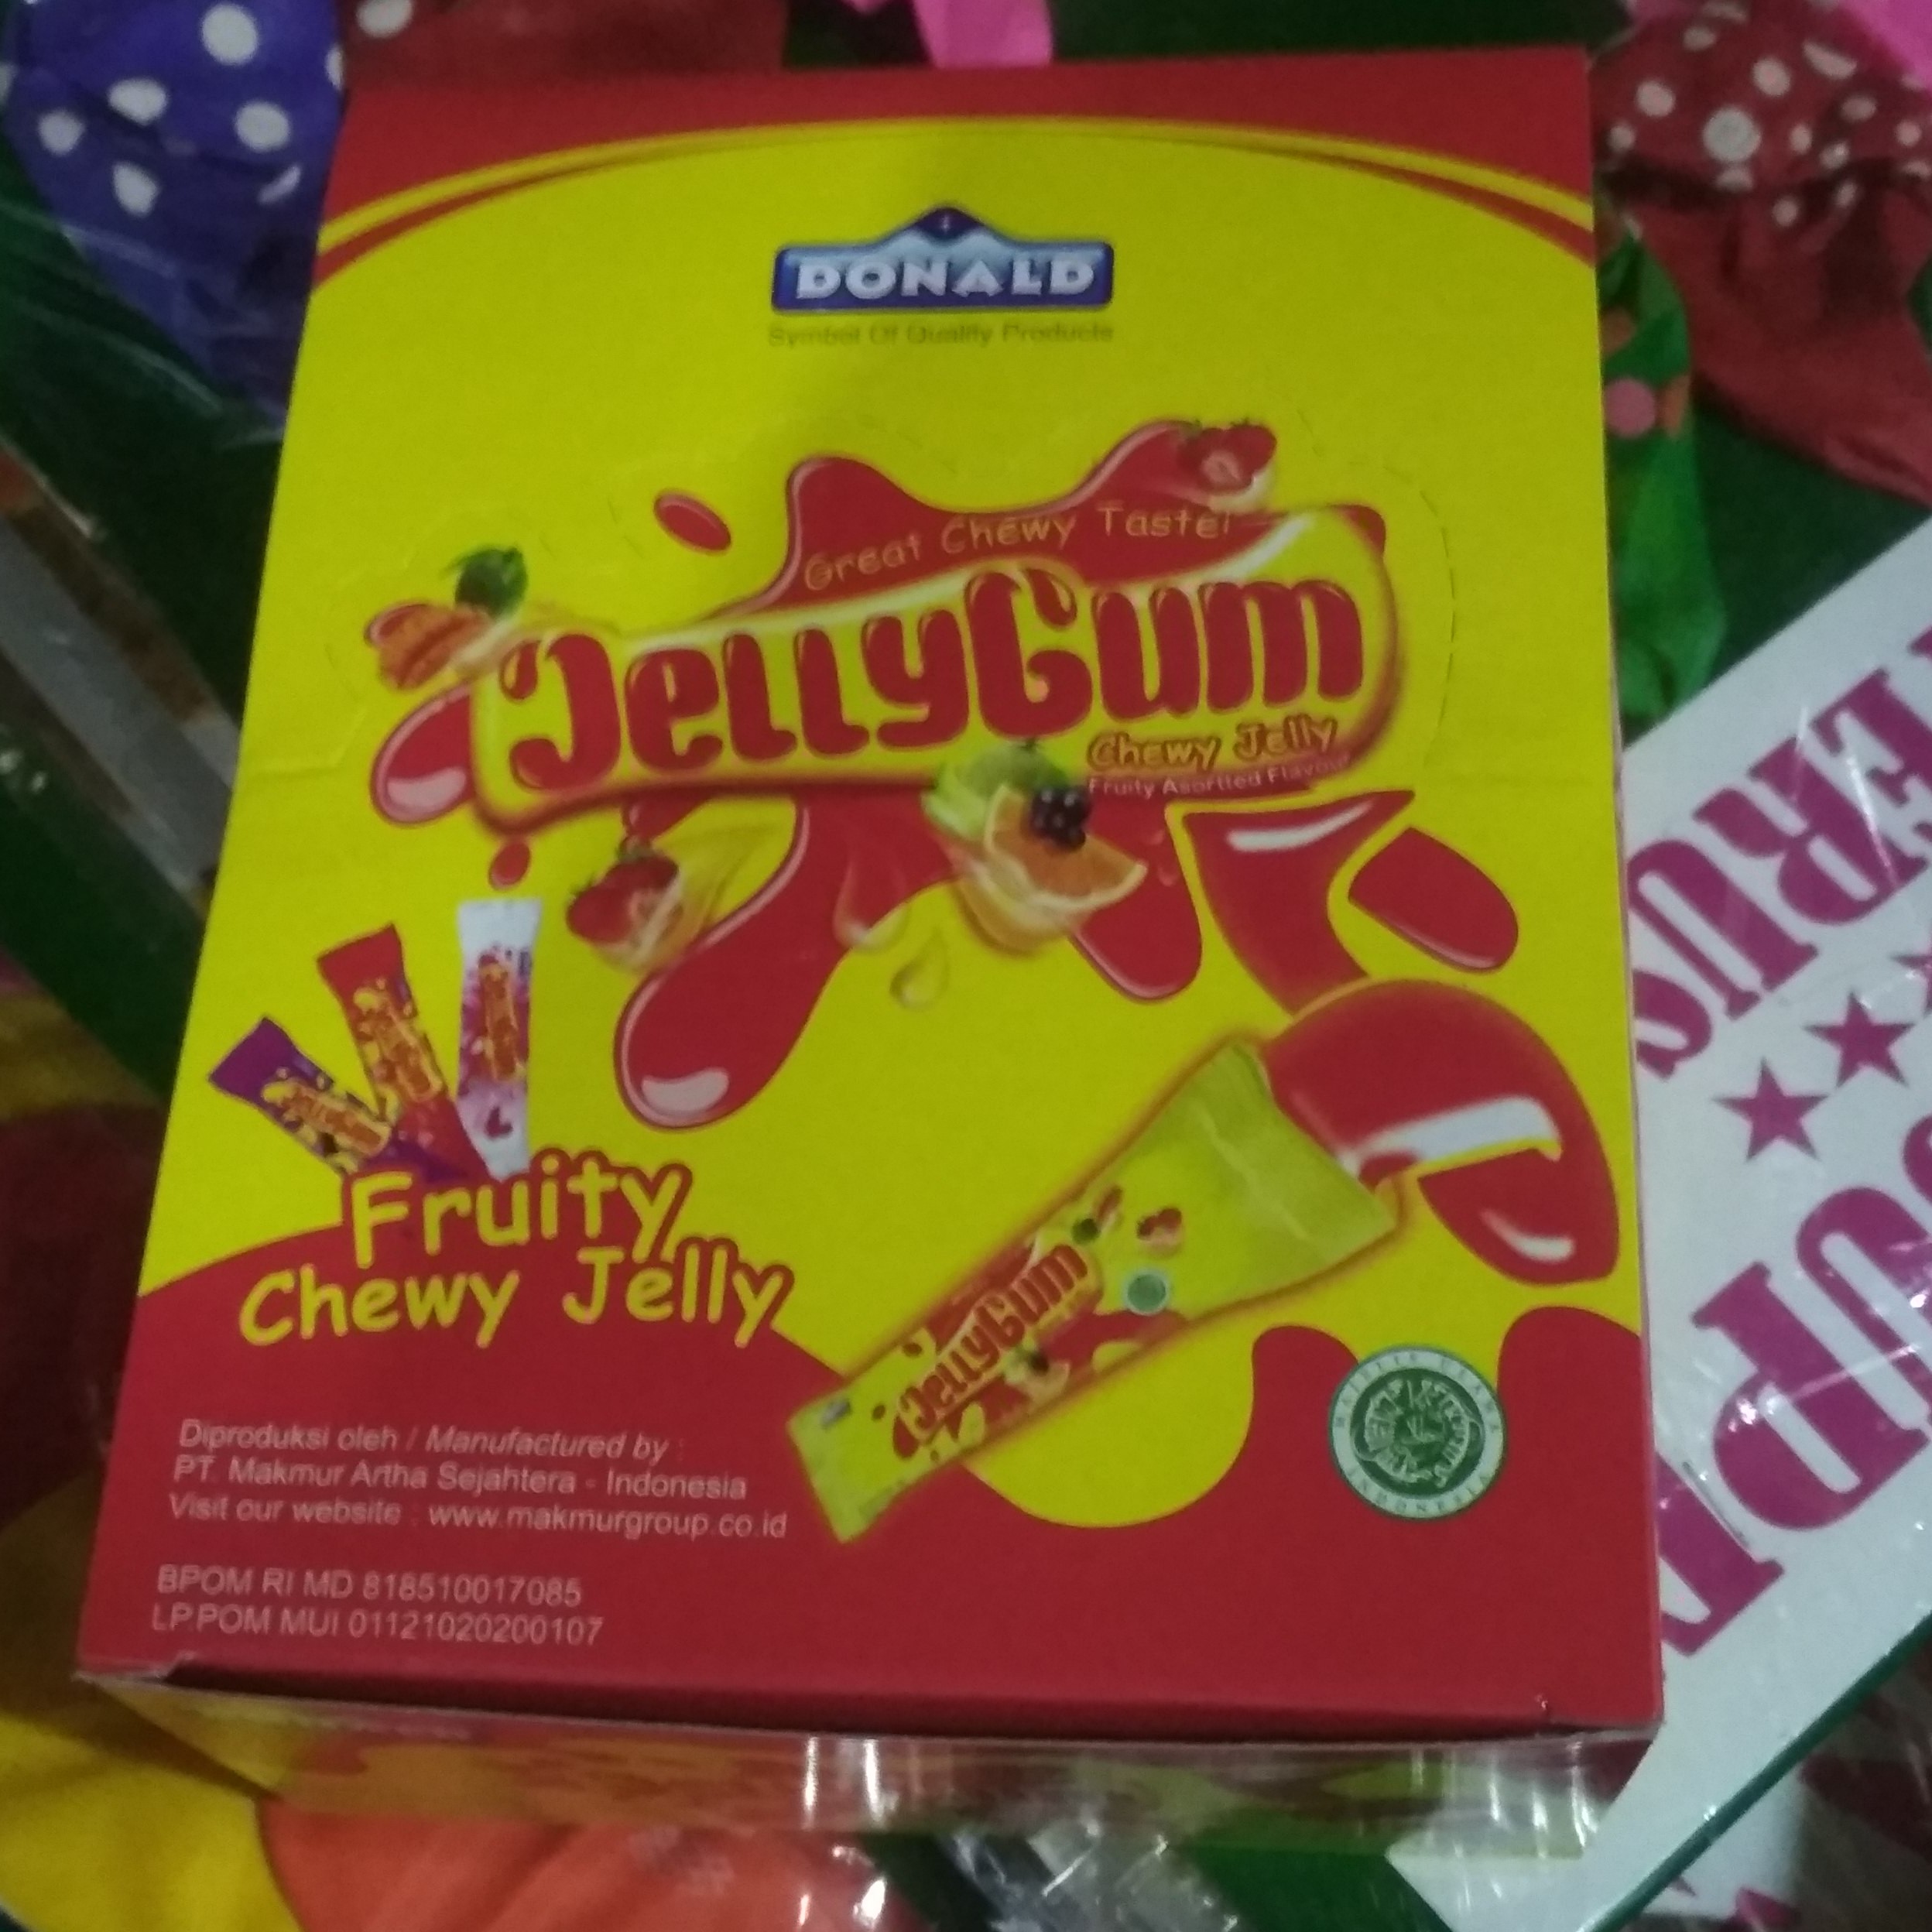 Jellygum